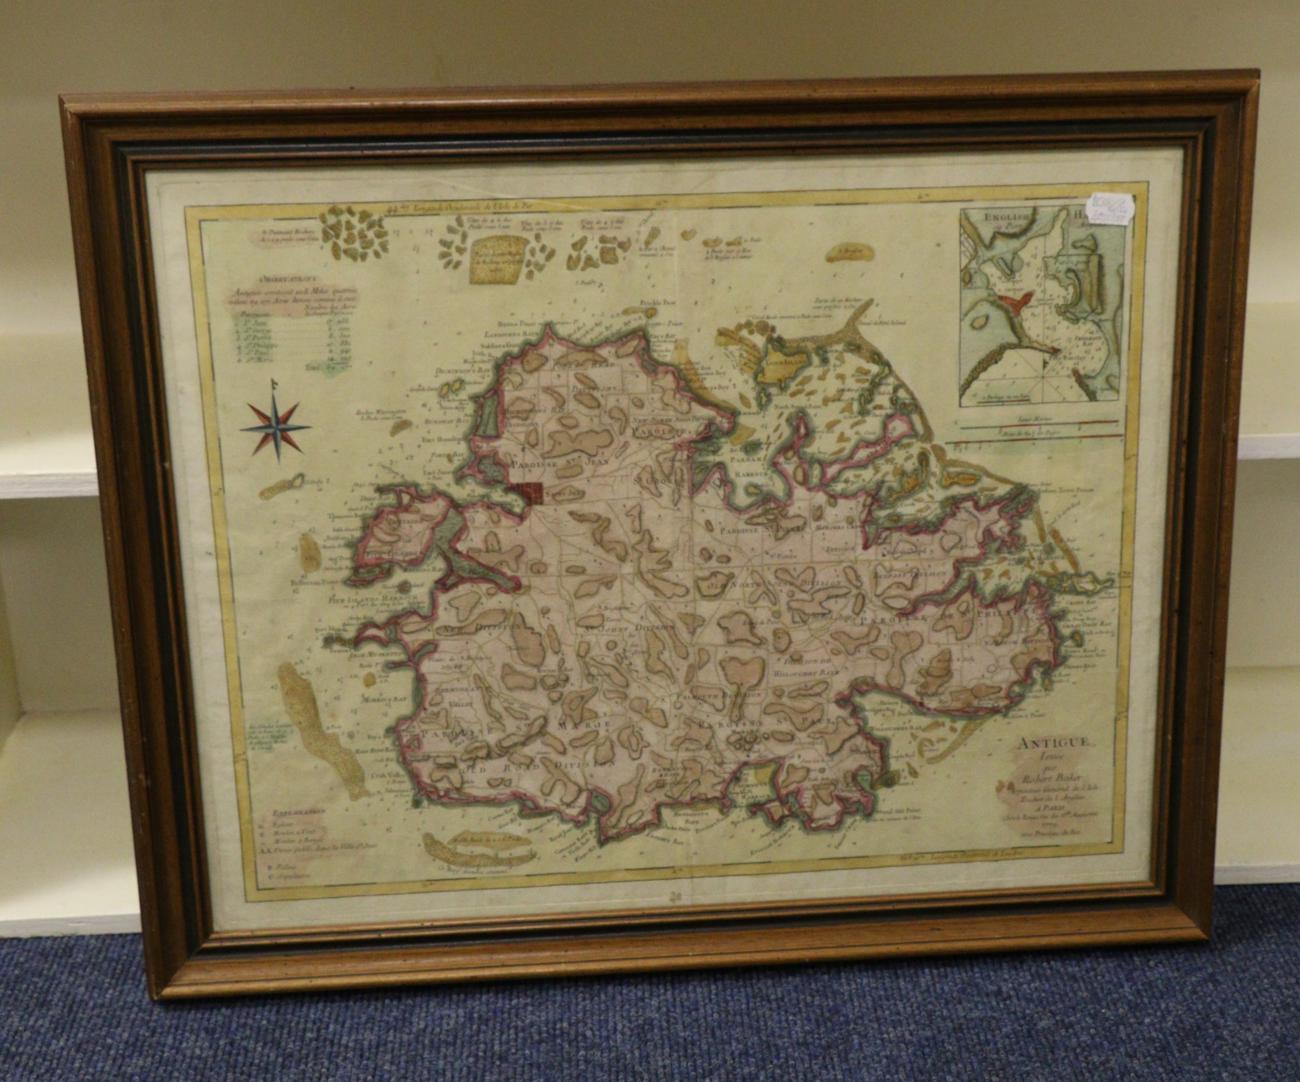 Baker (Robert, Surveyor) [Map of Antigua] Antigue, Levee par Robert Baker, Arpenteur General de l'